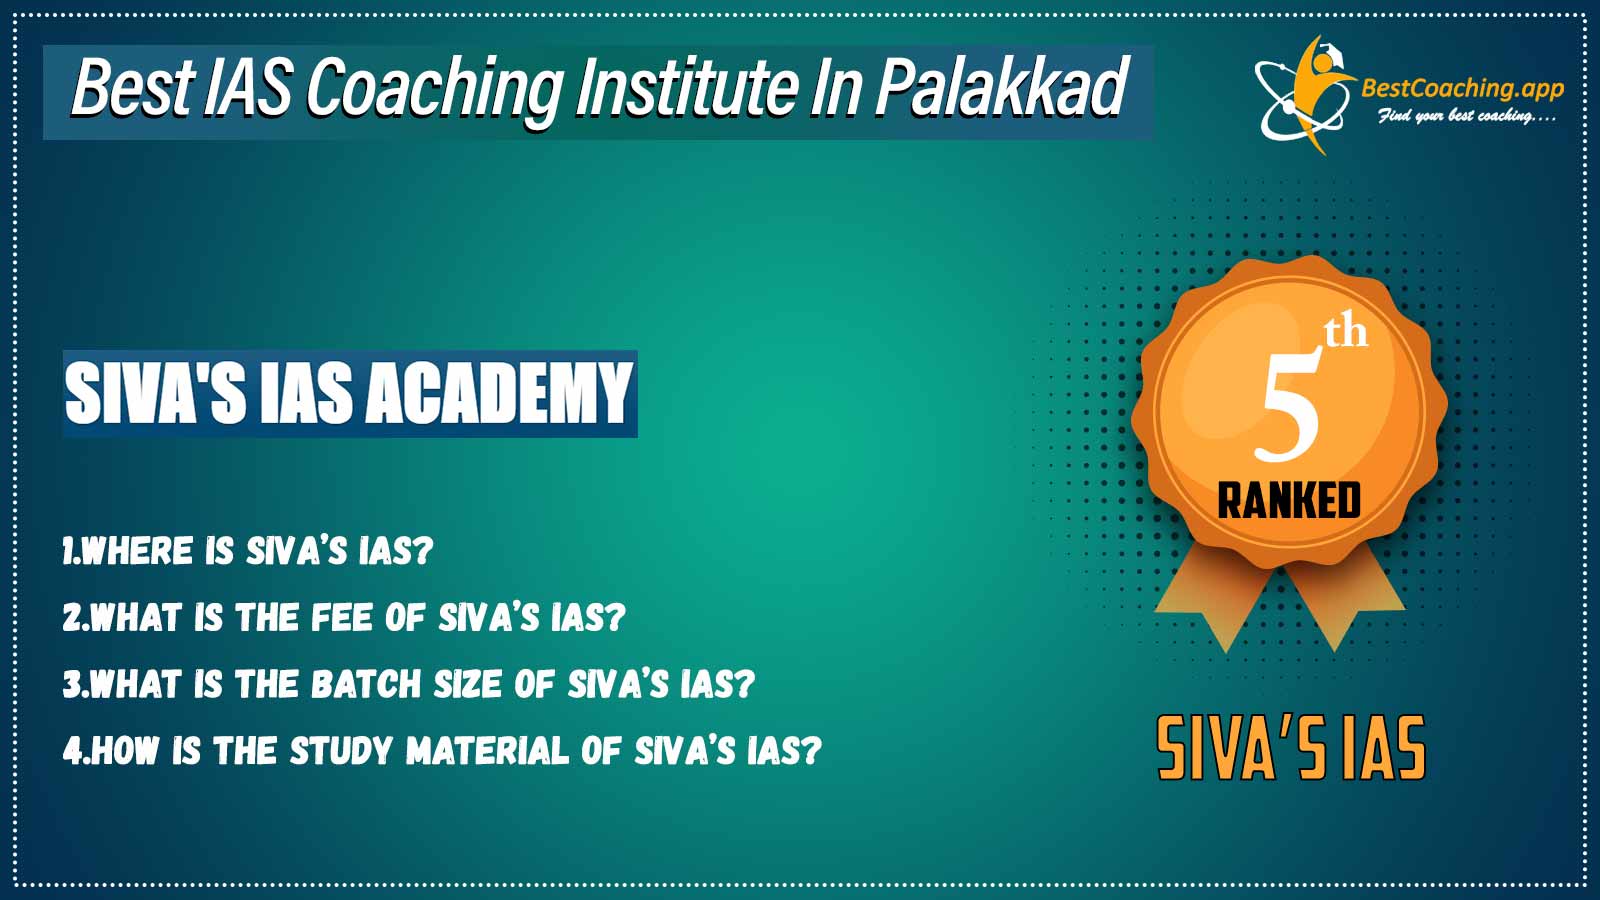 Top IAS Coaching in Palakkad